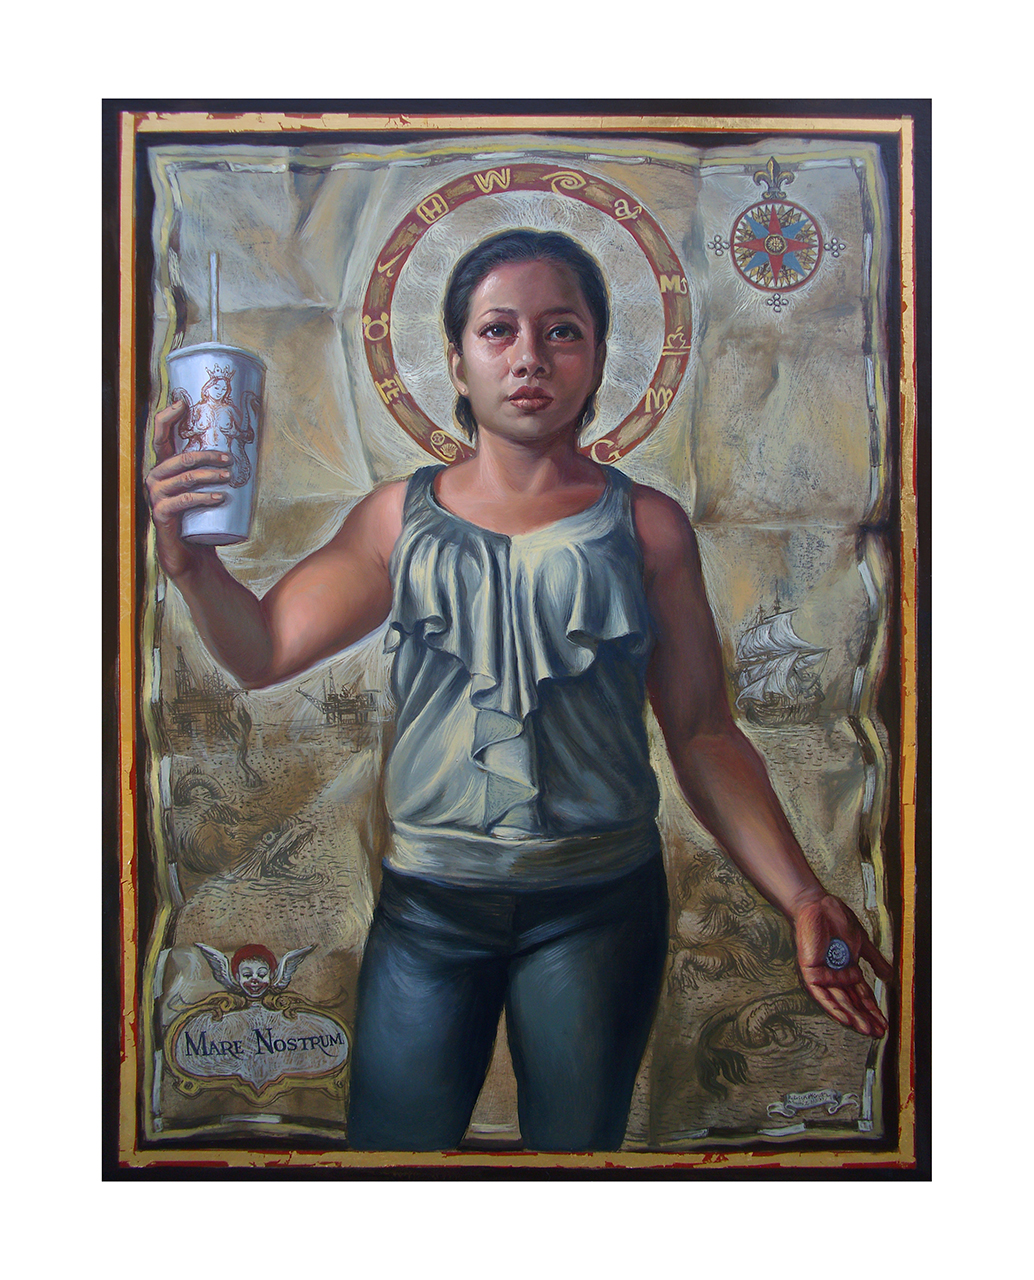 HEBE (2014) - Patrick McGrath Muñiz - Puerto Rican contemporary fine artist - Oil & gold leaf on panel, 18" x 24" - US$. 3250.